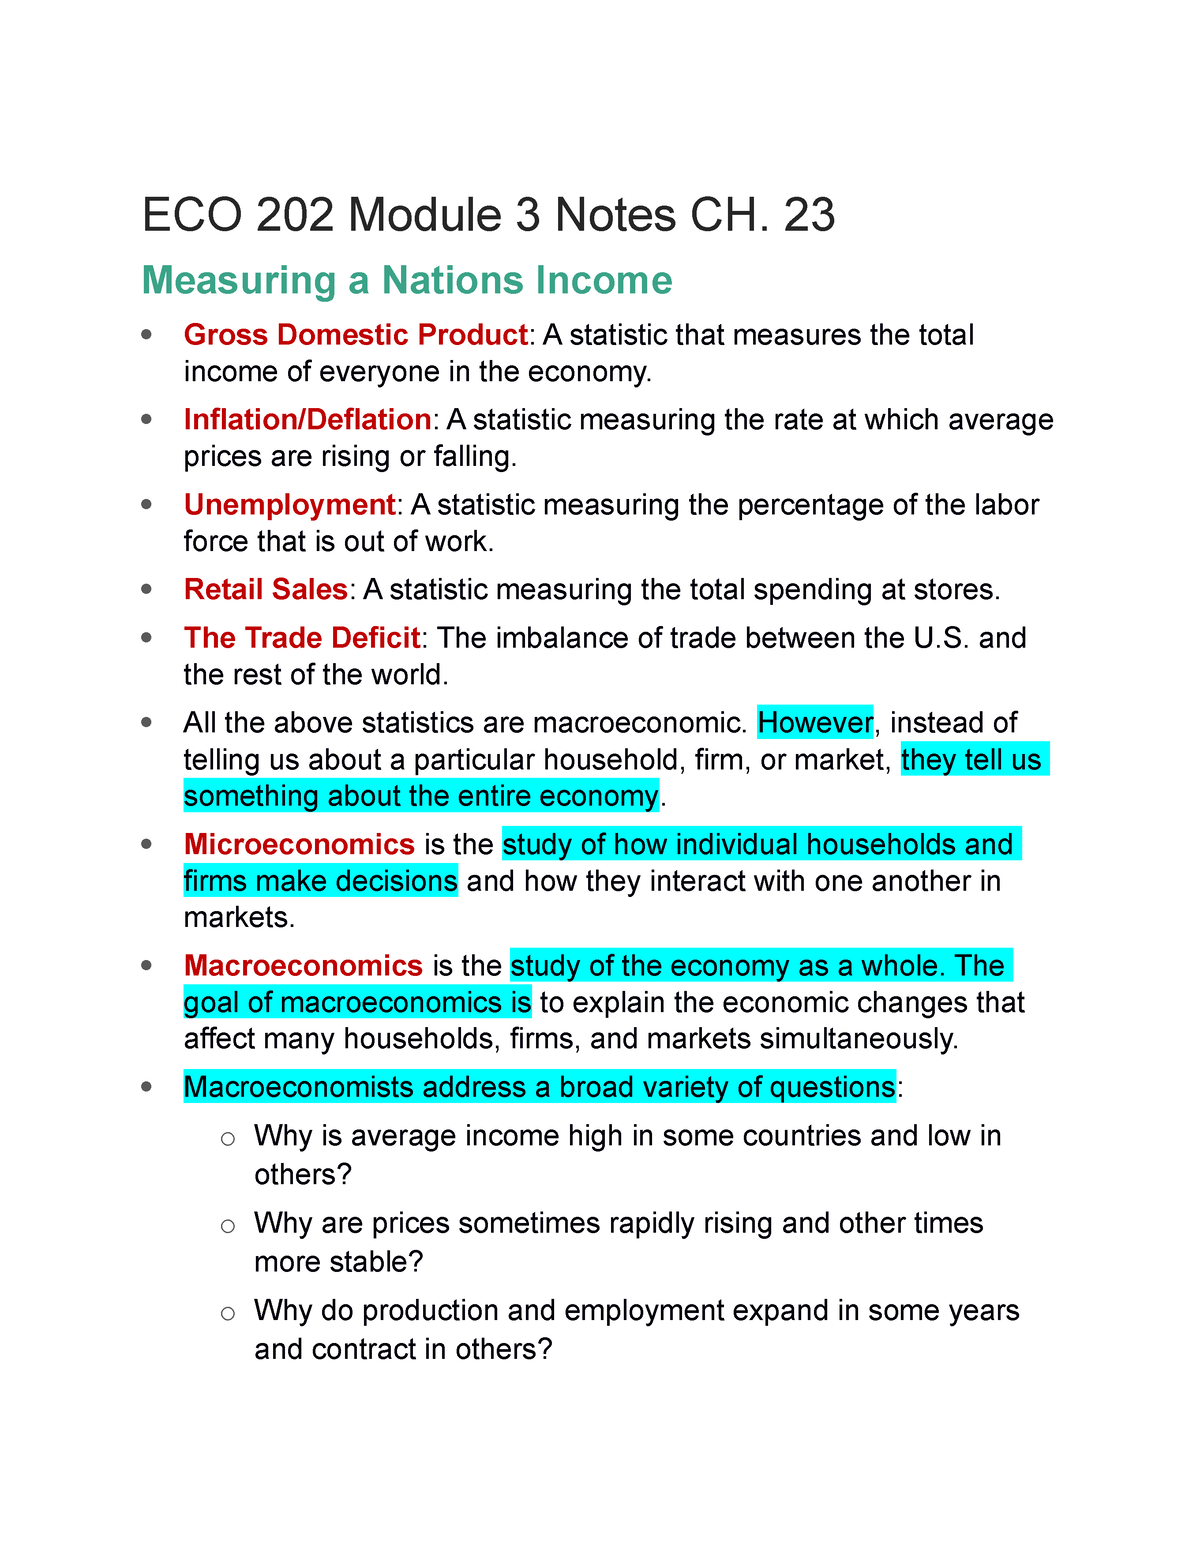 ECO 202 Module 3 Notes Ch 23 ECO 202 Module 3 Notes CH. 23 Measuring